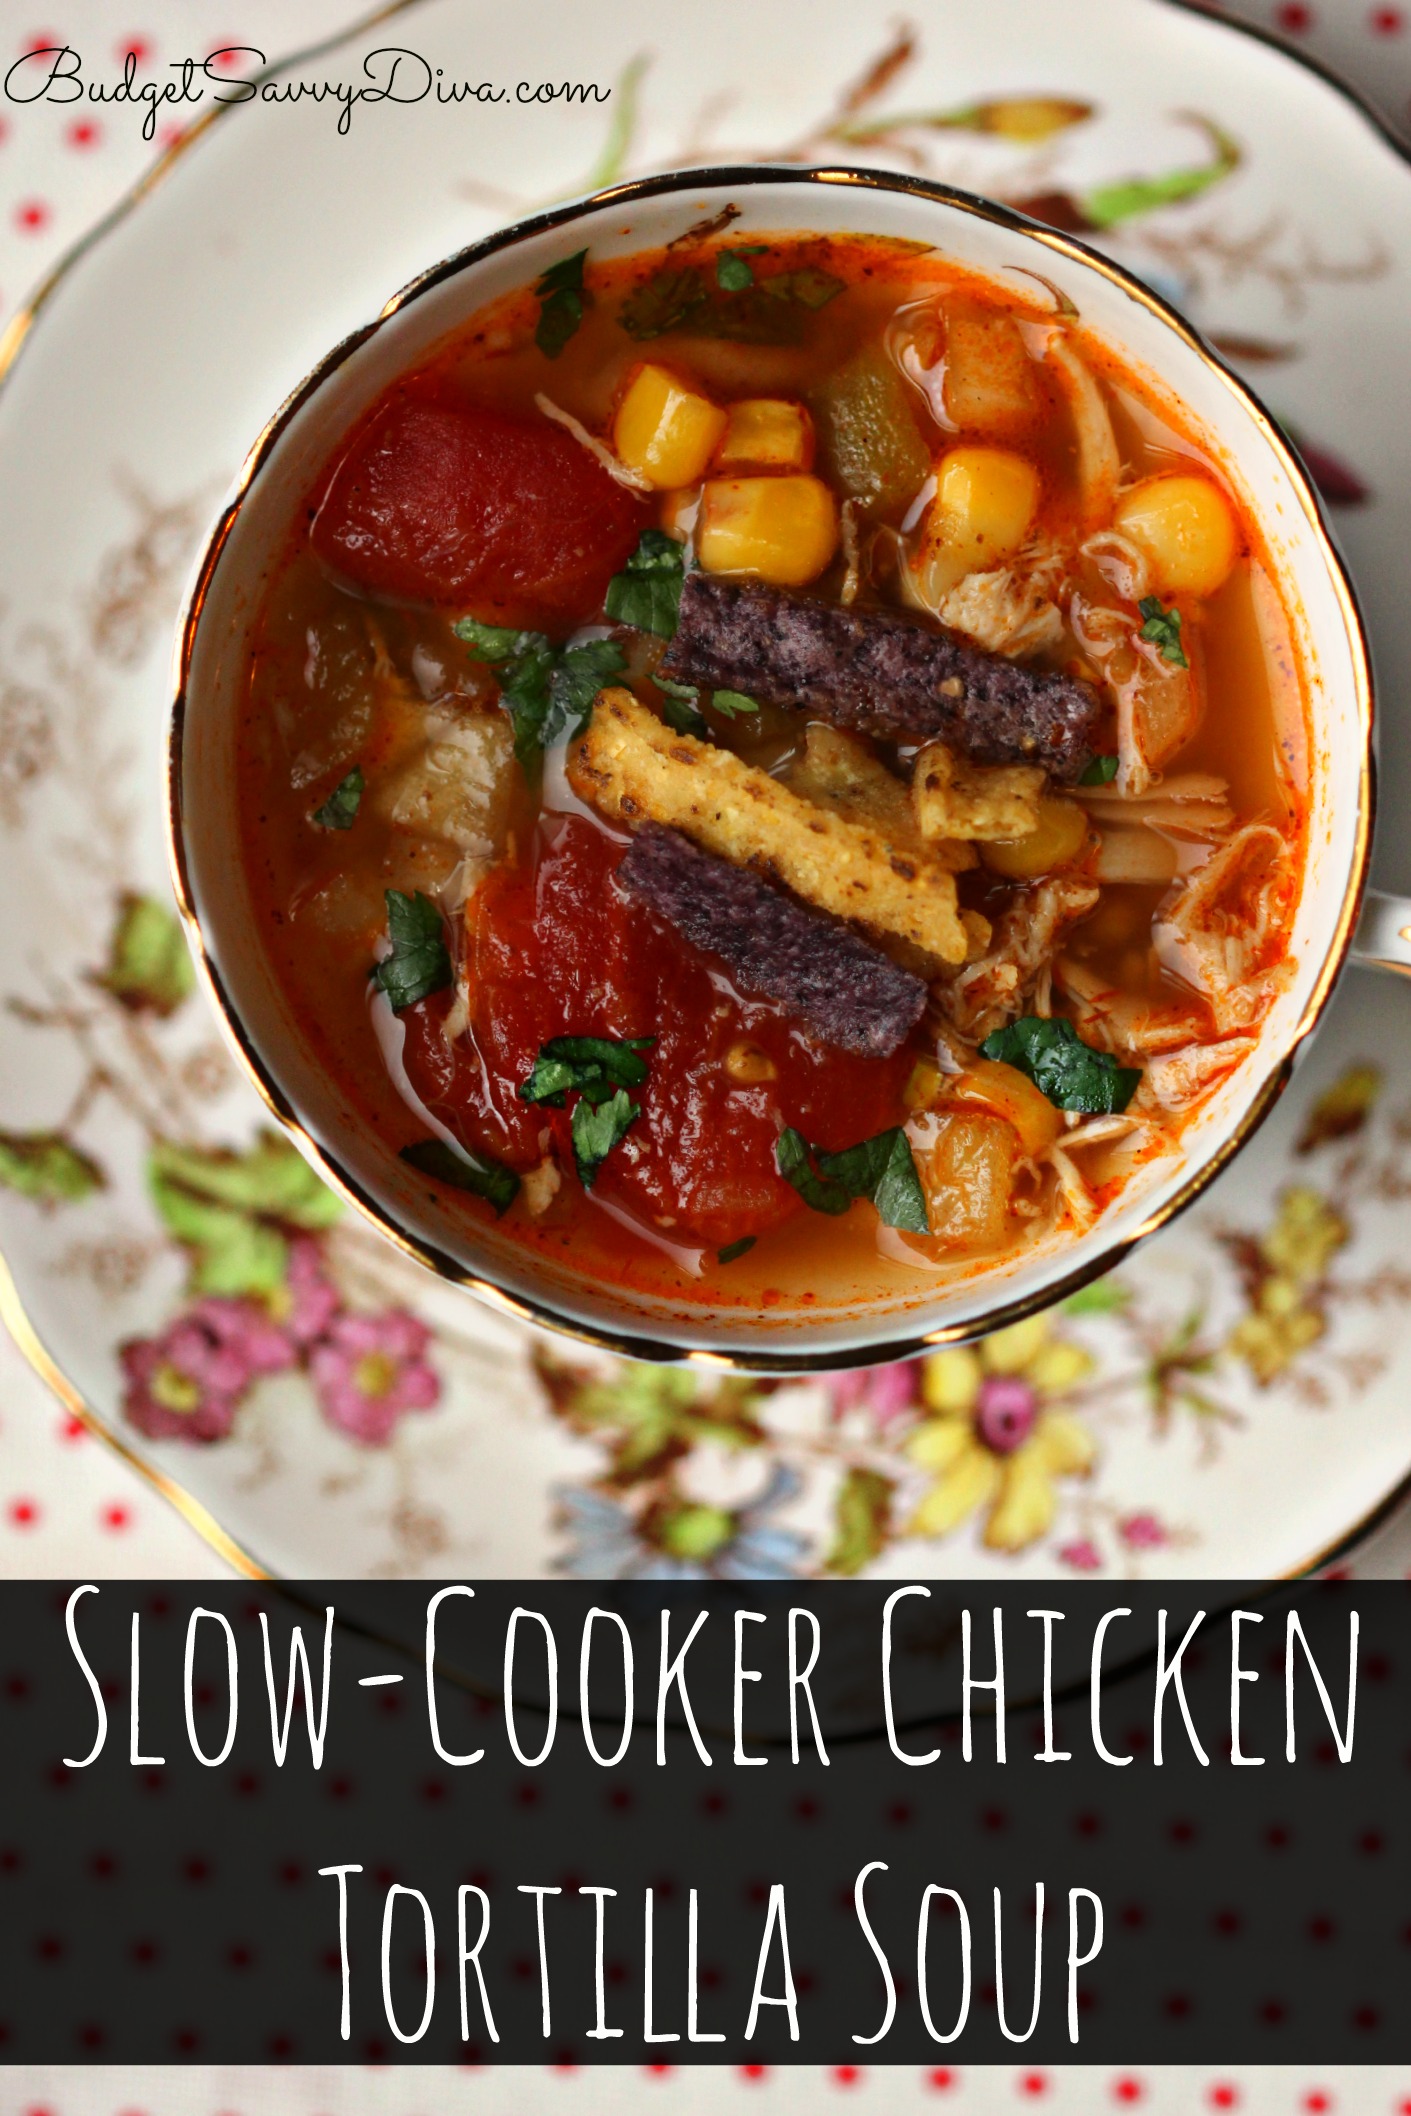 Slow-Cooker Chicken Tortilla Soup Recipe | Budget Savvy Diva